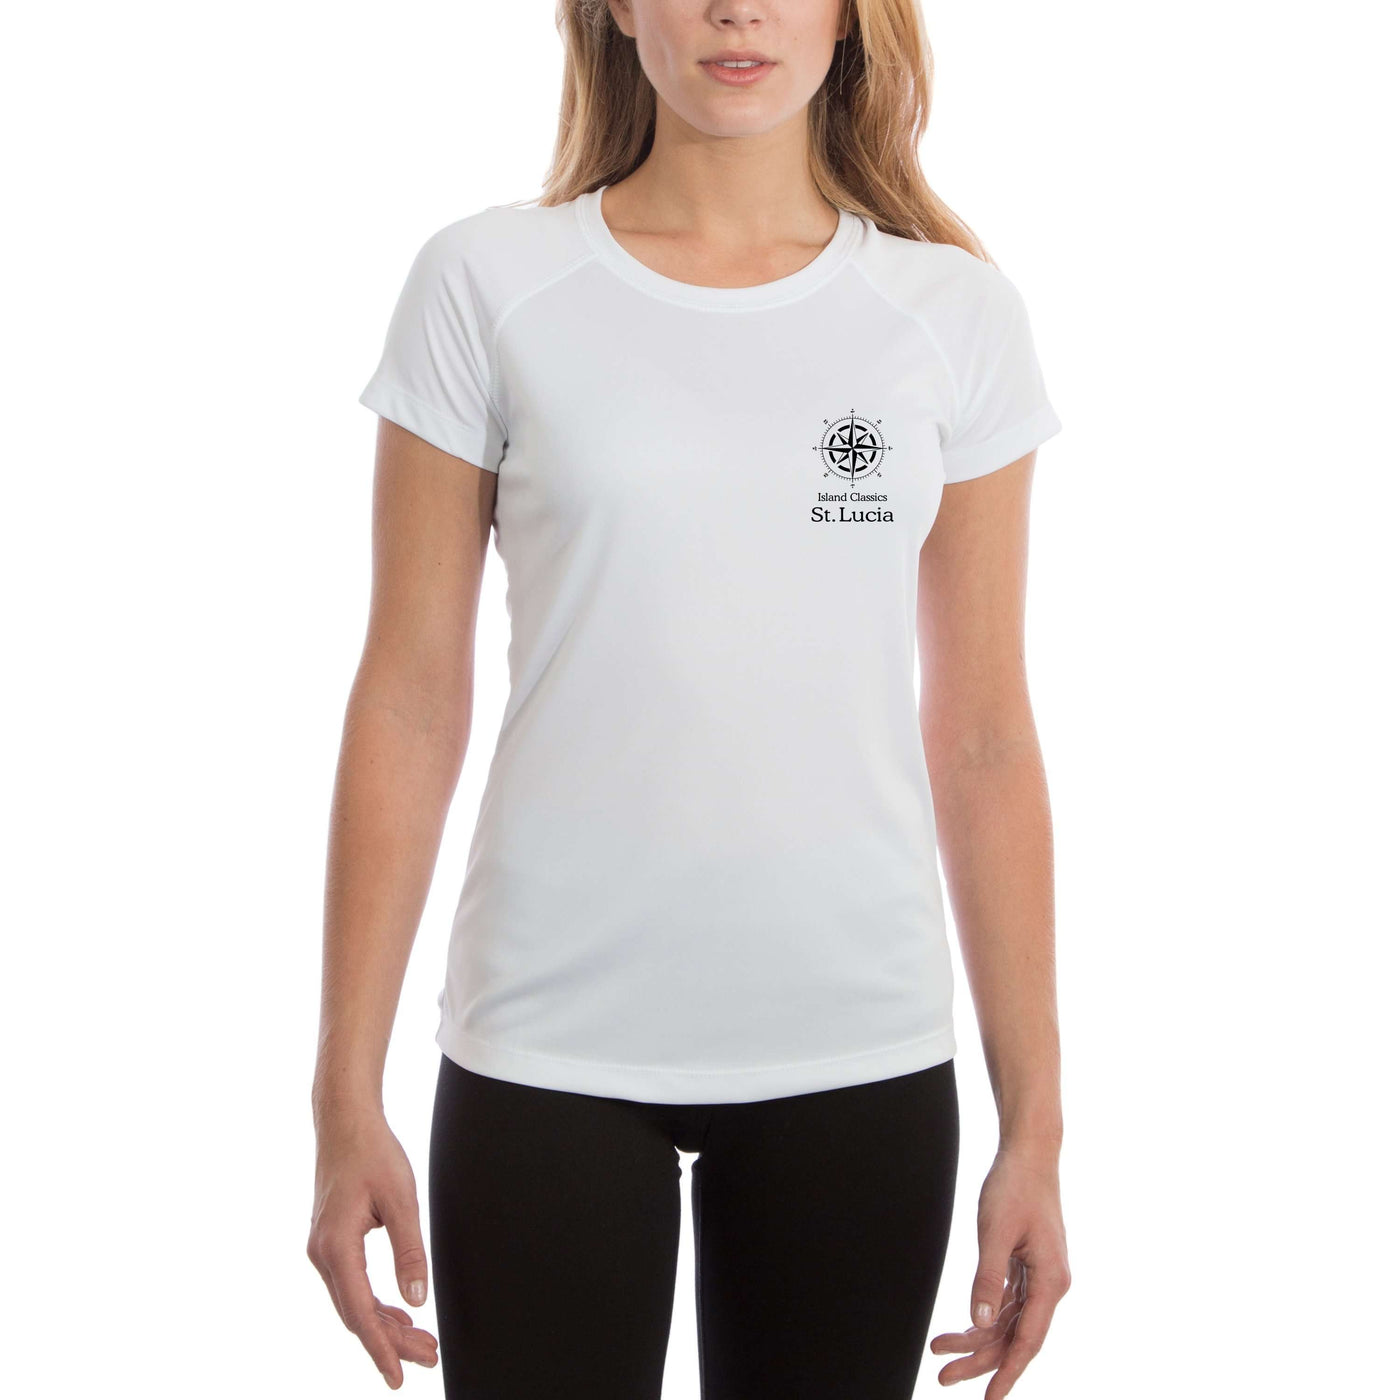 Island Classics St. Lucia Women's UPF 50+ UV Sun Protection Short Sleeve T-shirt